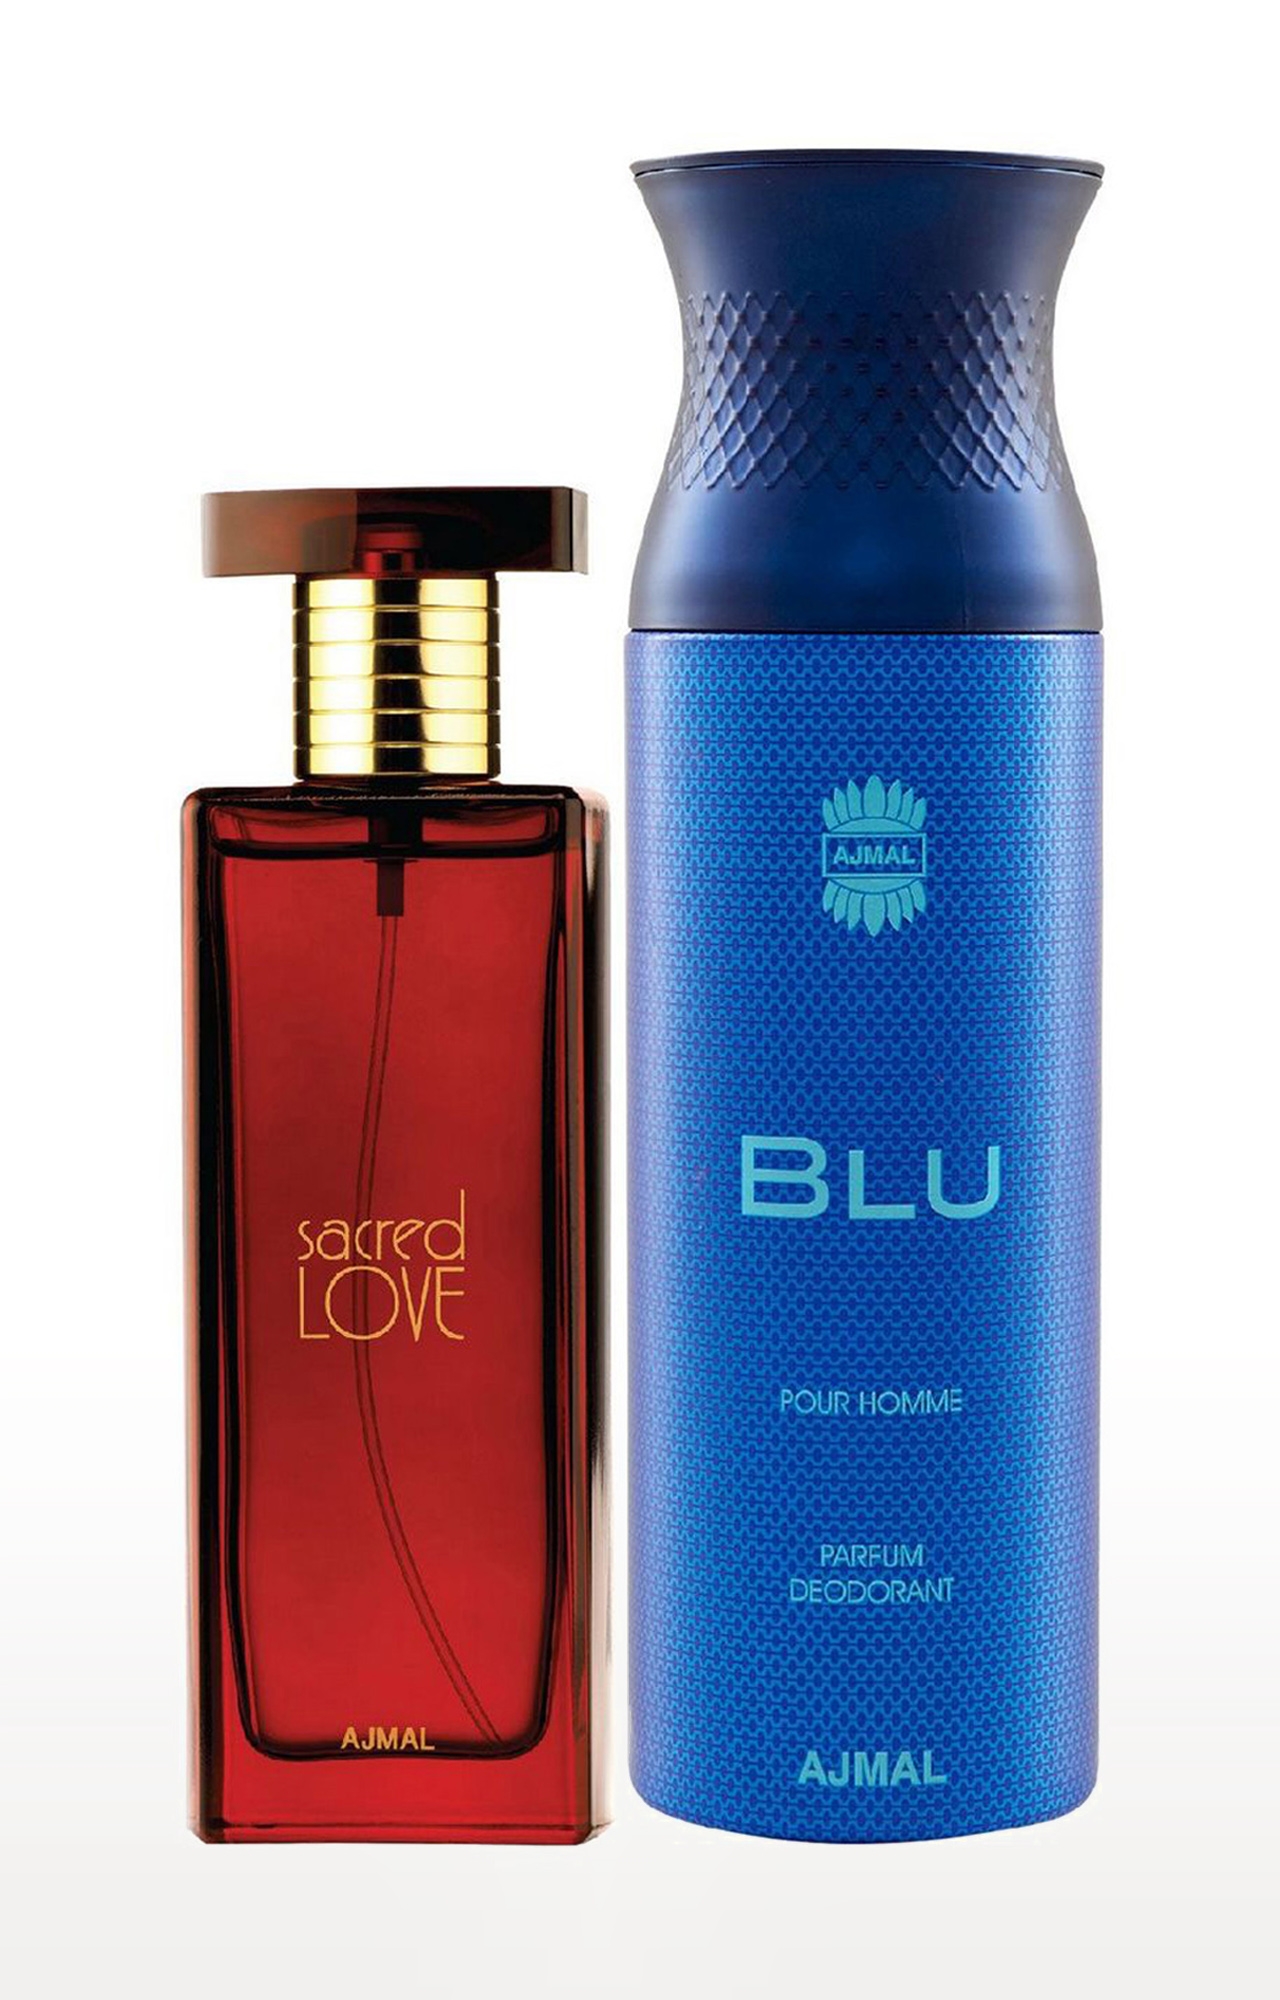 Ajmal Sacred Love EDP Musky Perfume 50ml for Women and Blu Homme Deodorant Aquatic Fragrance 200ml for Men